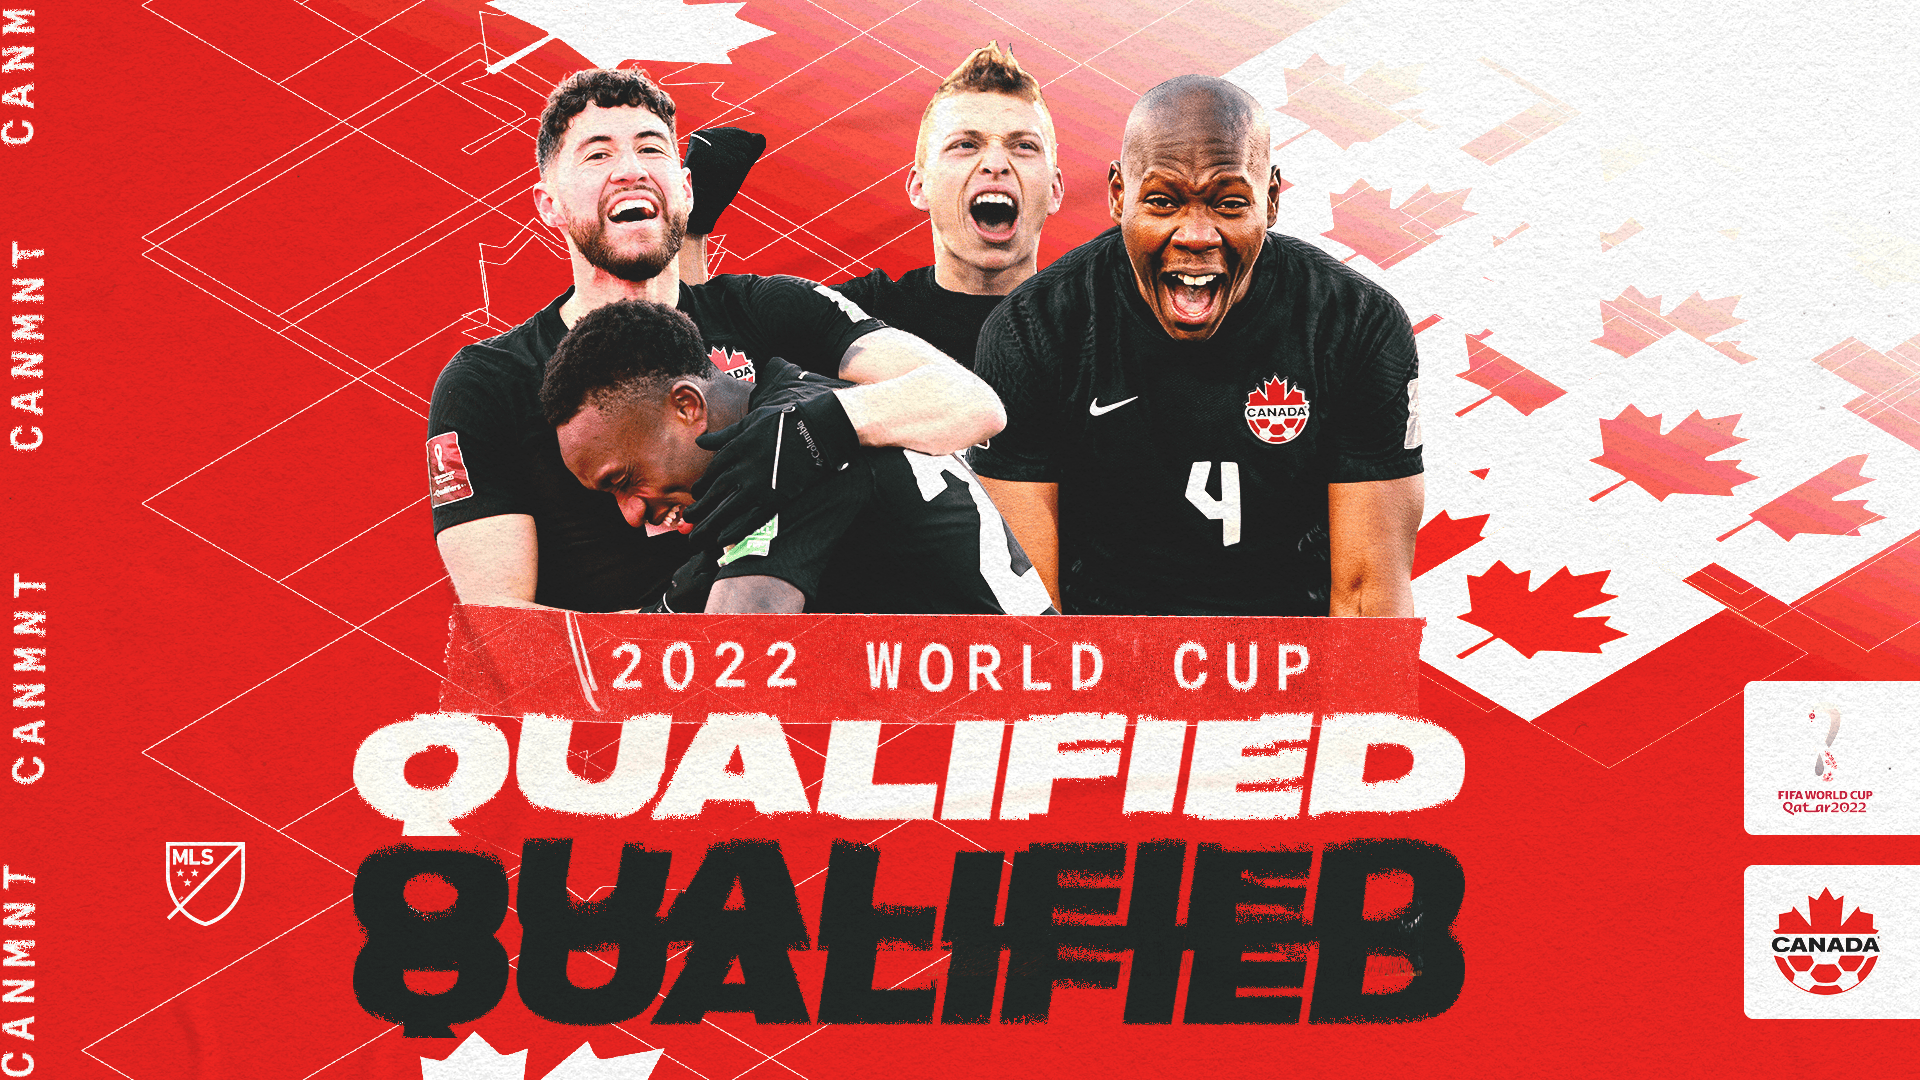 Canada qualify to Qatar 2022 World Cup CAN 4, JAM 0